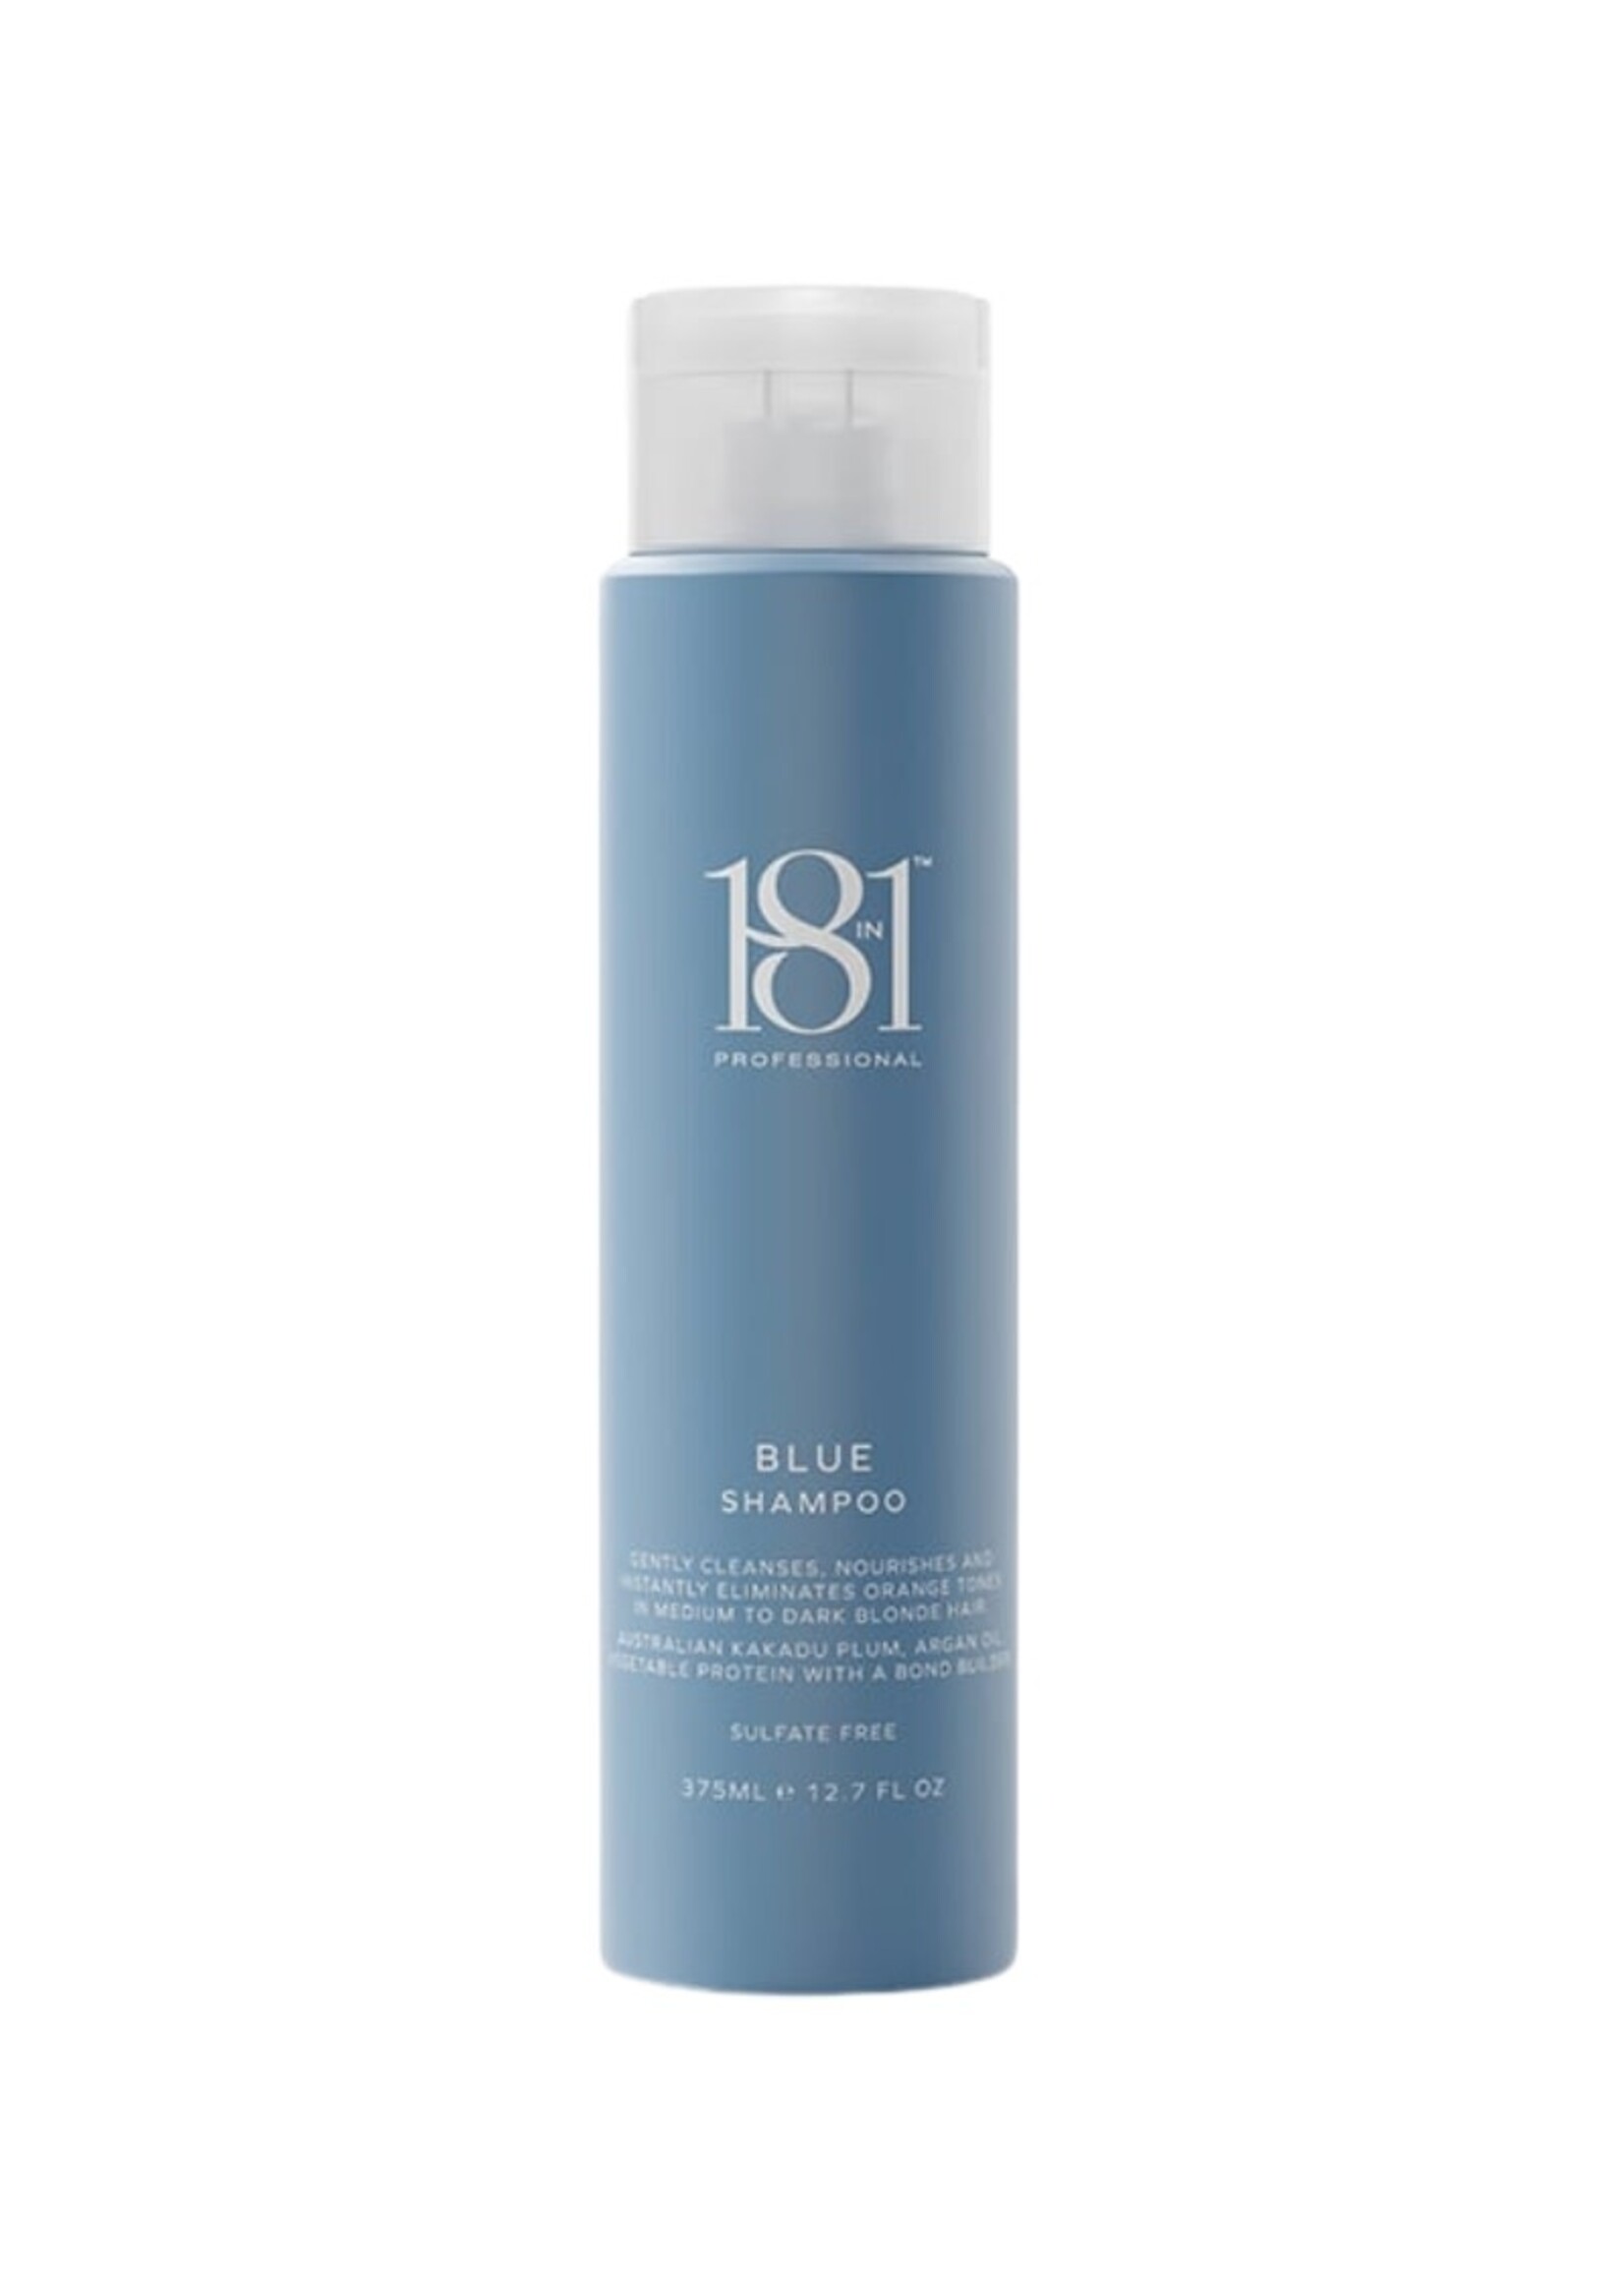 18 In 1 Professional Blue Shampoo 375ml